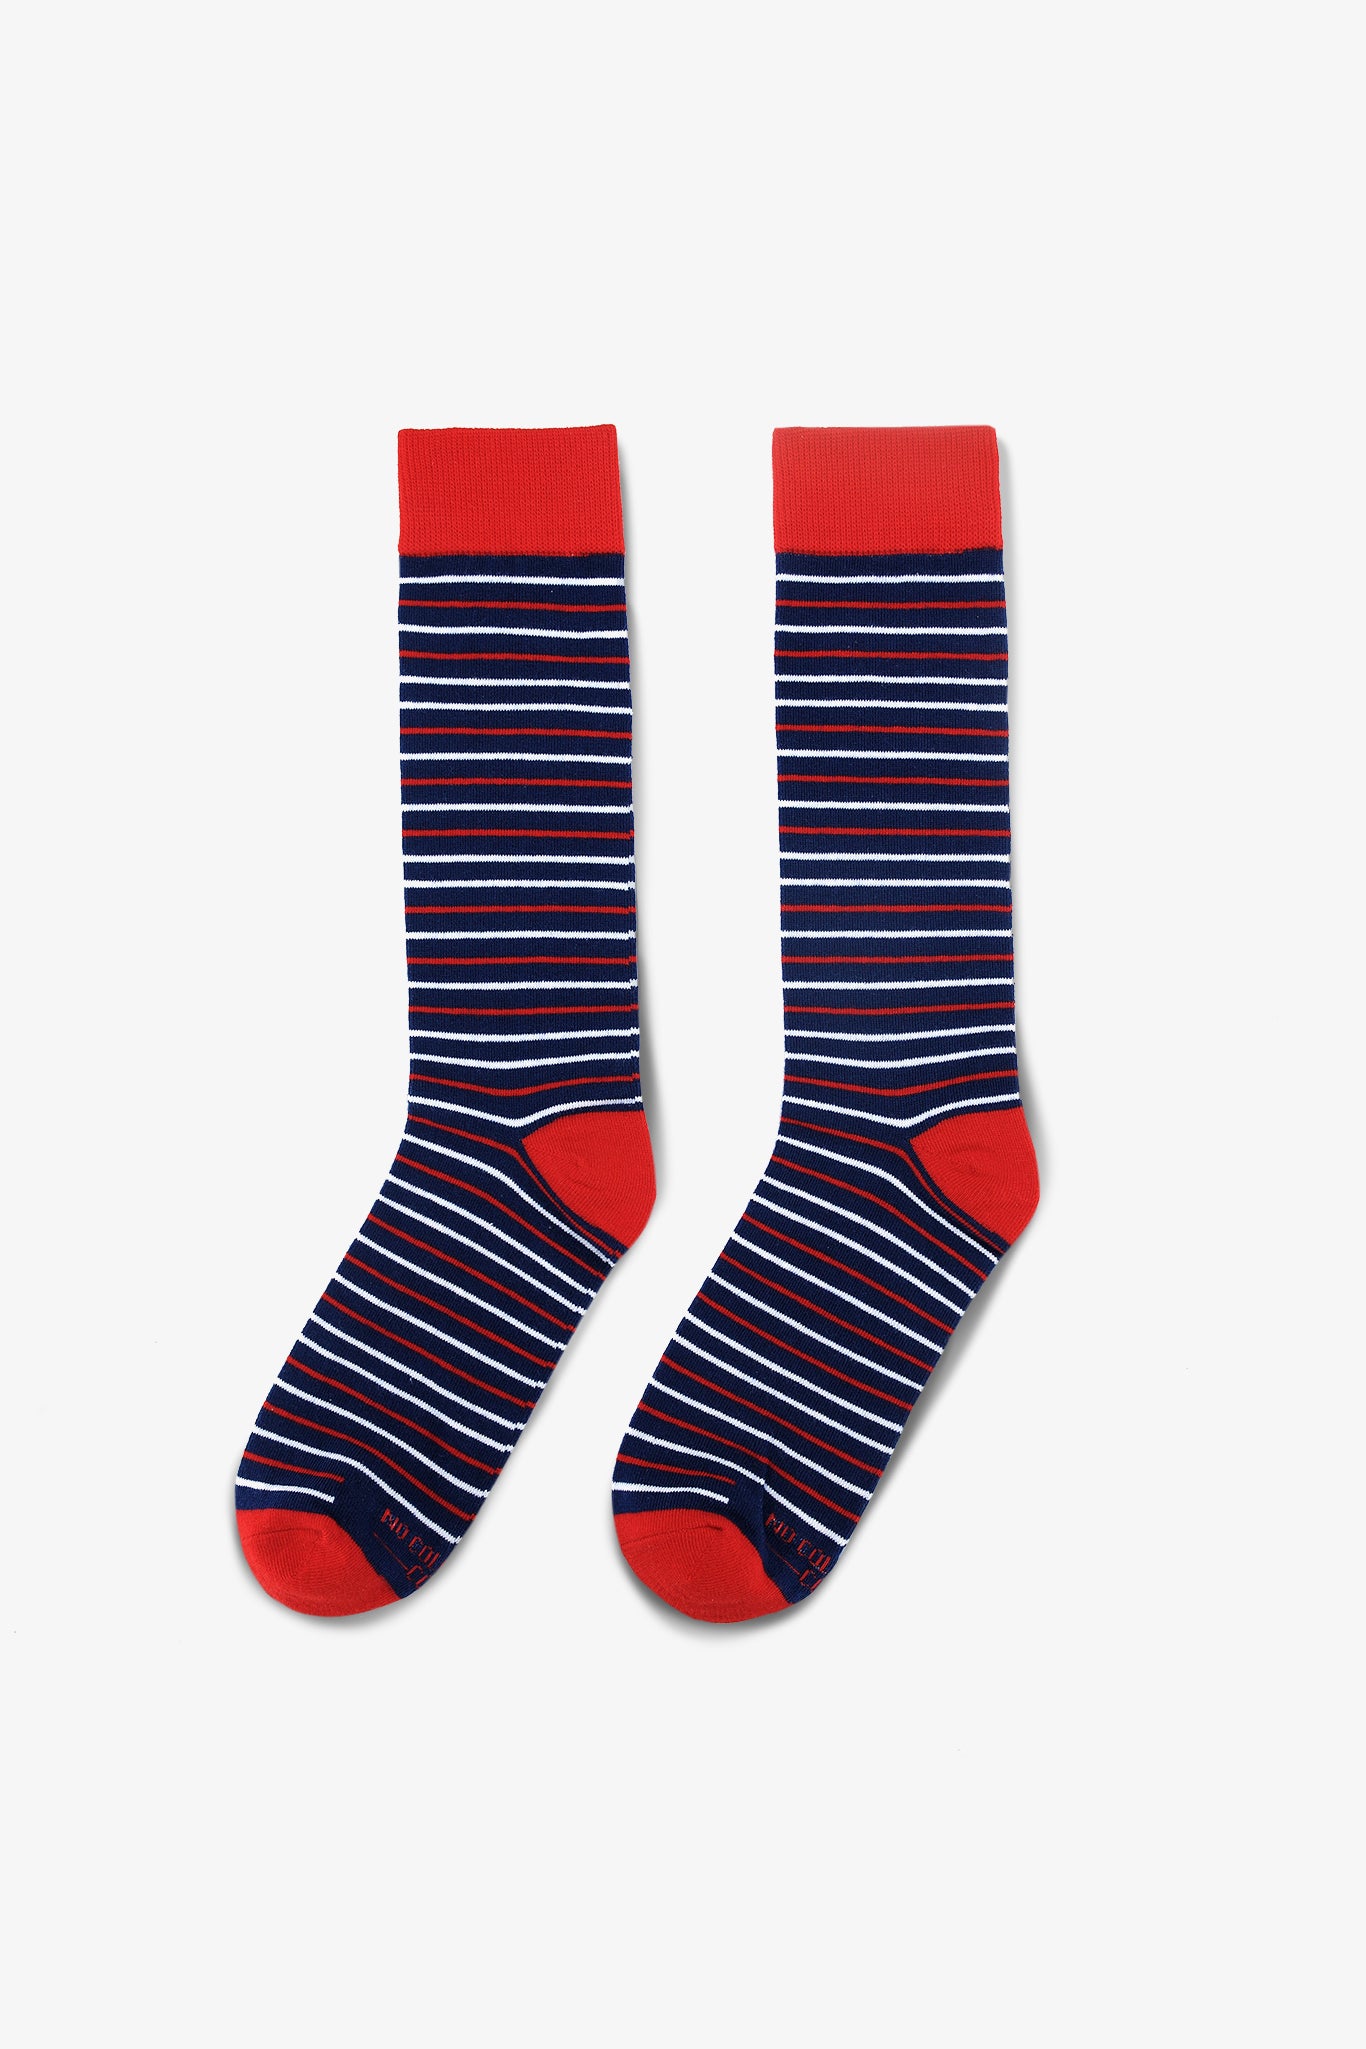 Striped Groomsmen Socks By No Cold Feet - Red